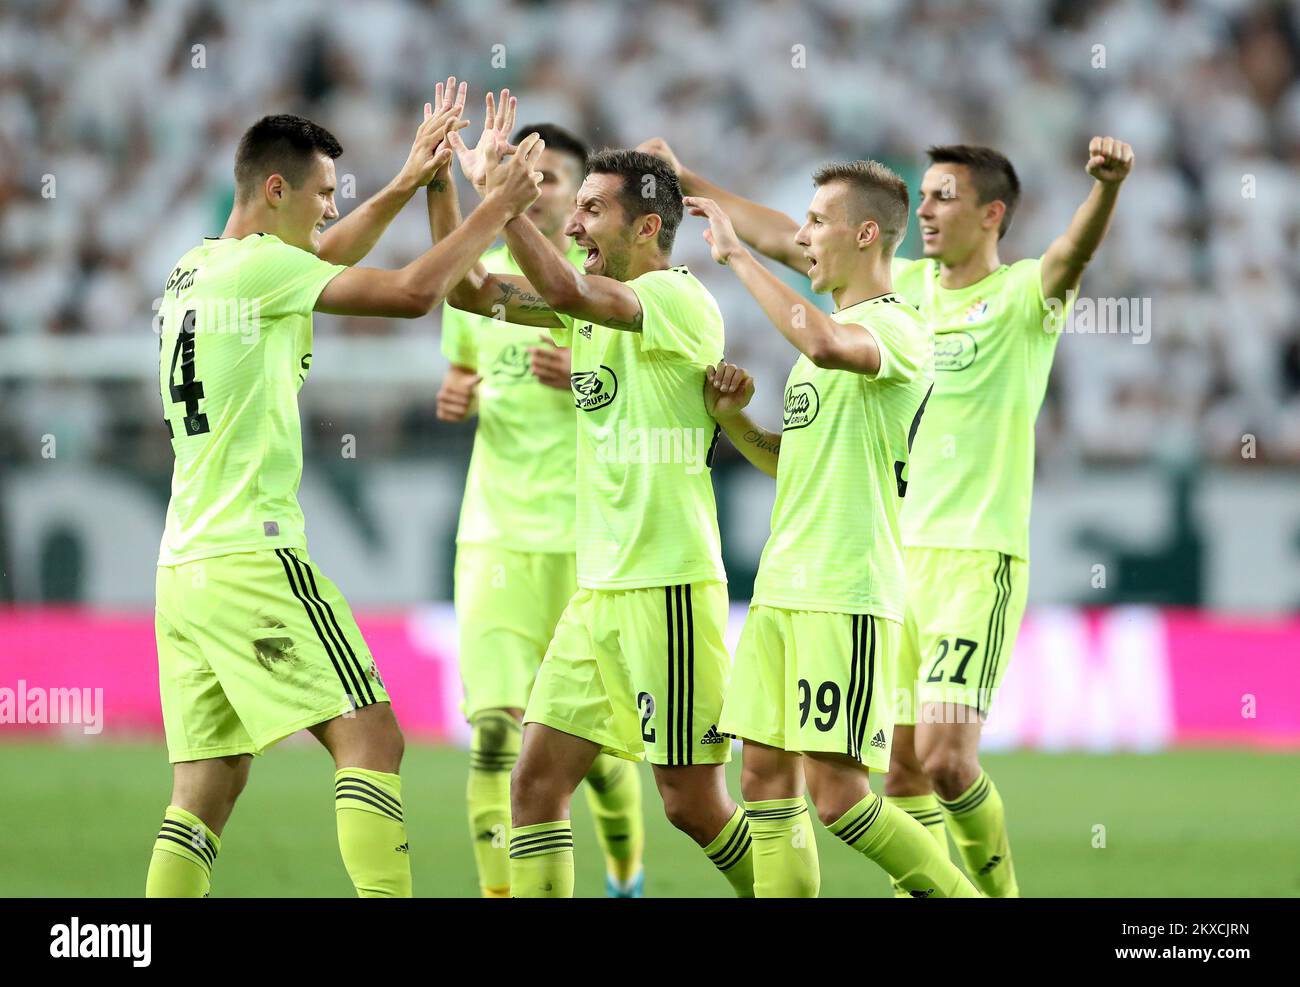 Amer Gojak of Ferencvarosi TC celebrates after scoring a goal with